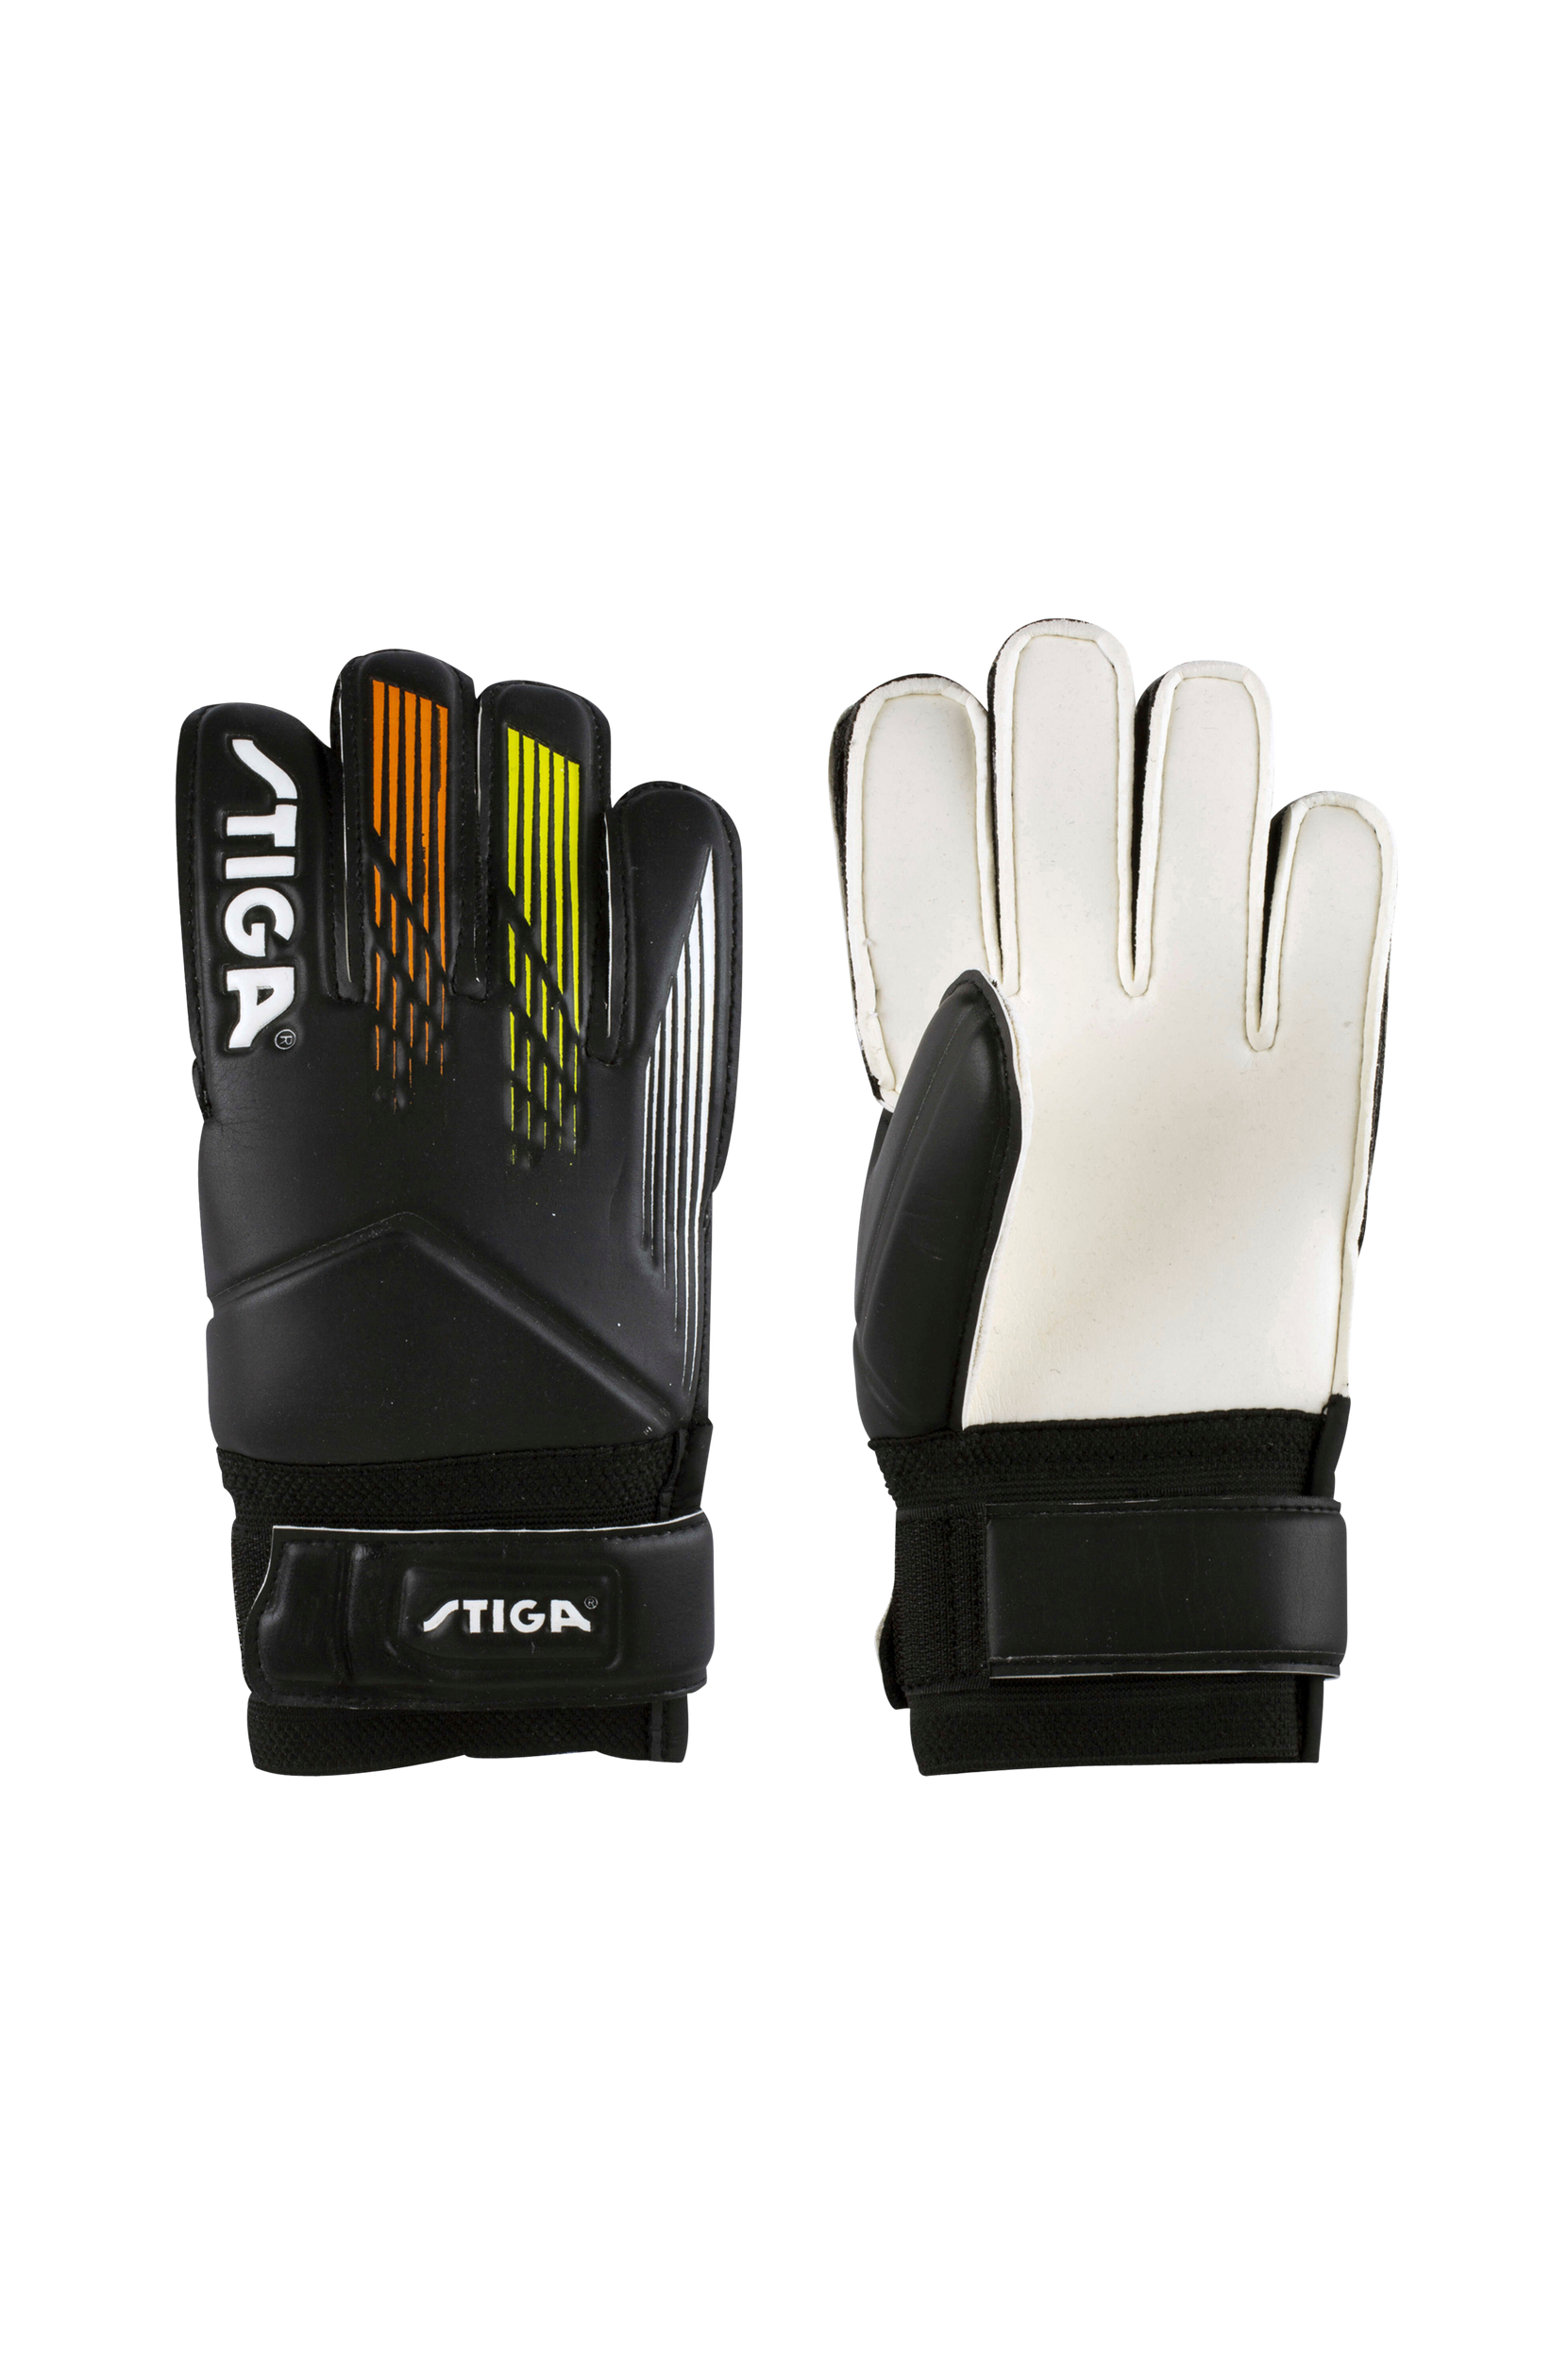 FB Goalkeeper Gloves Size 5, Stiga